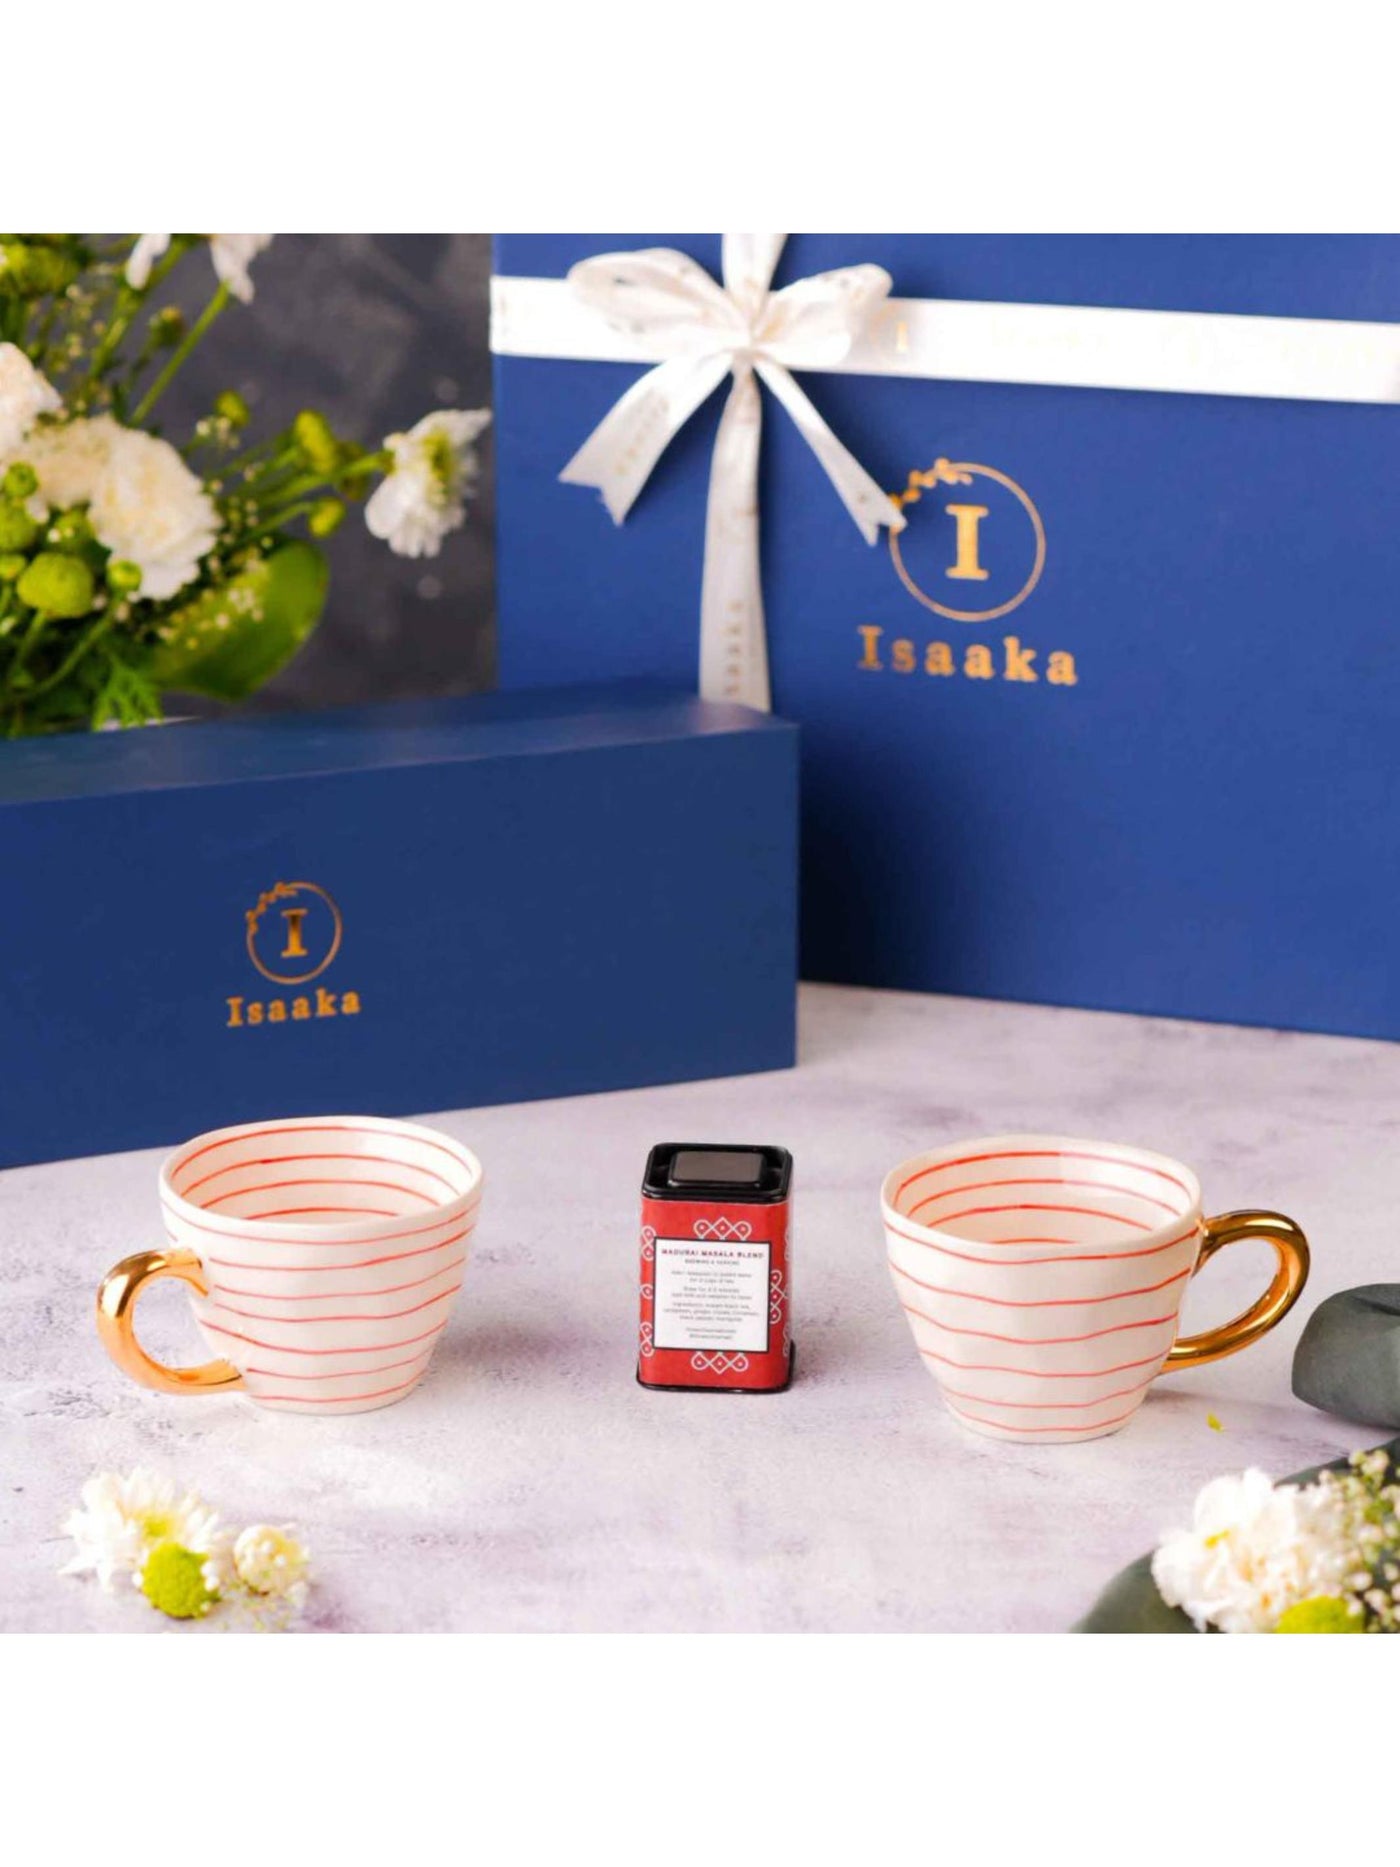 Cup & Tea Gift Box - Waldo